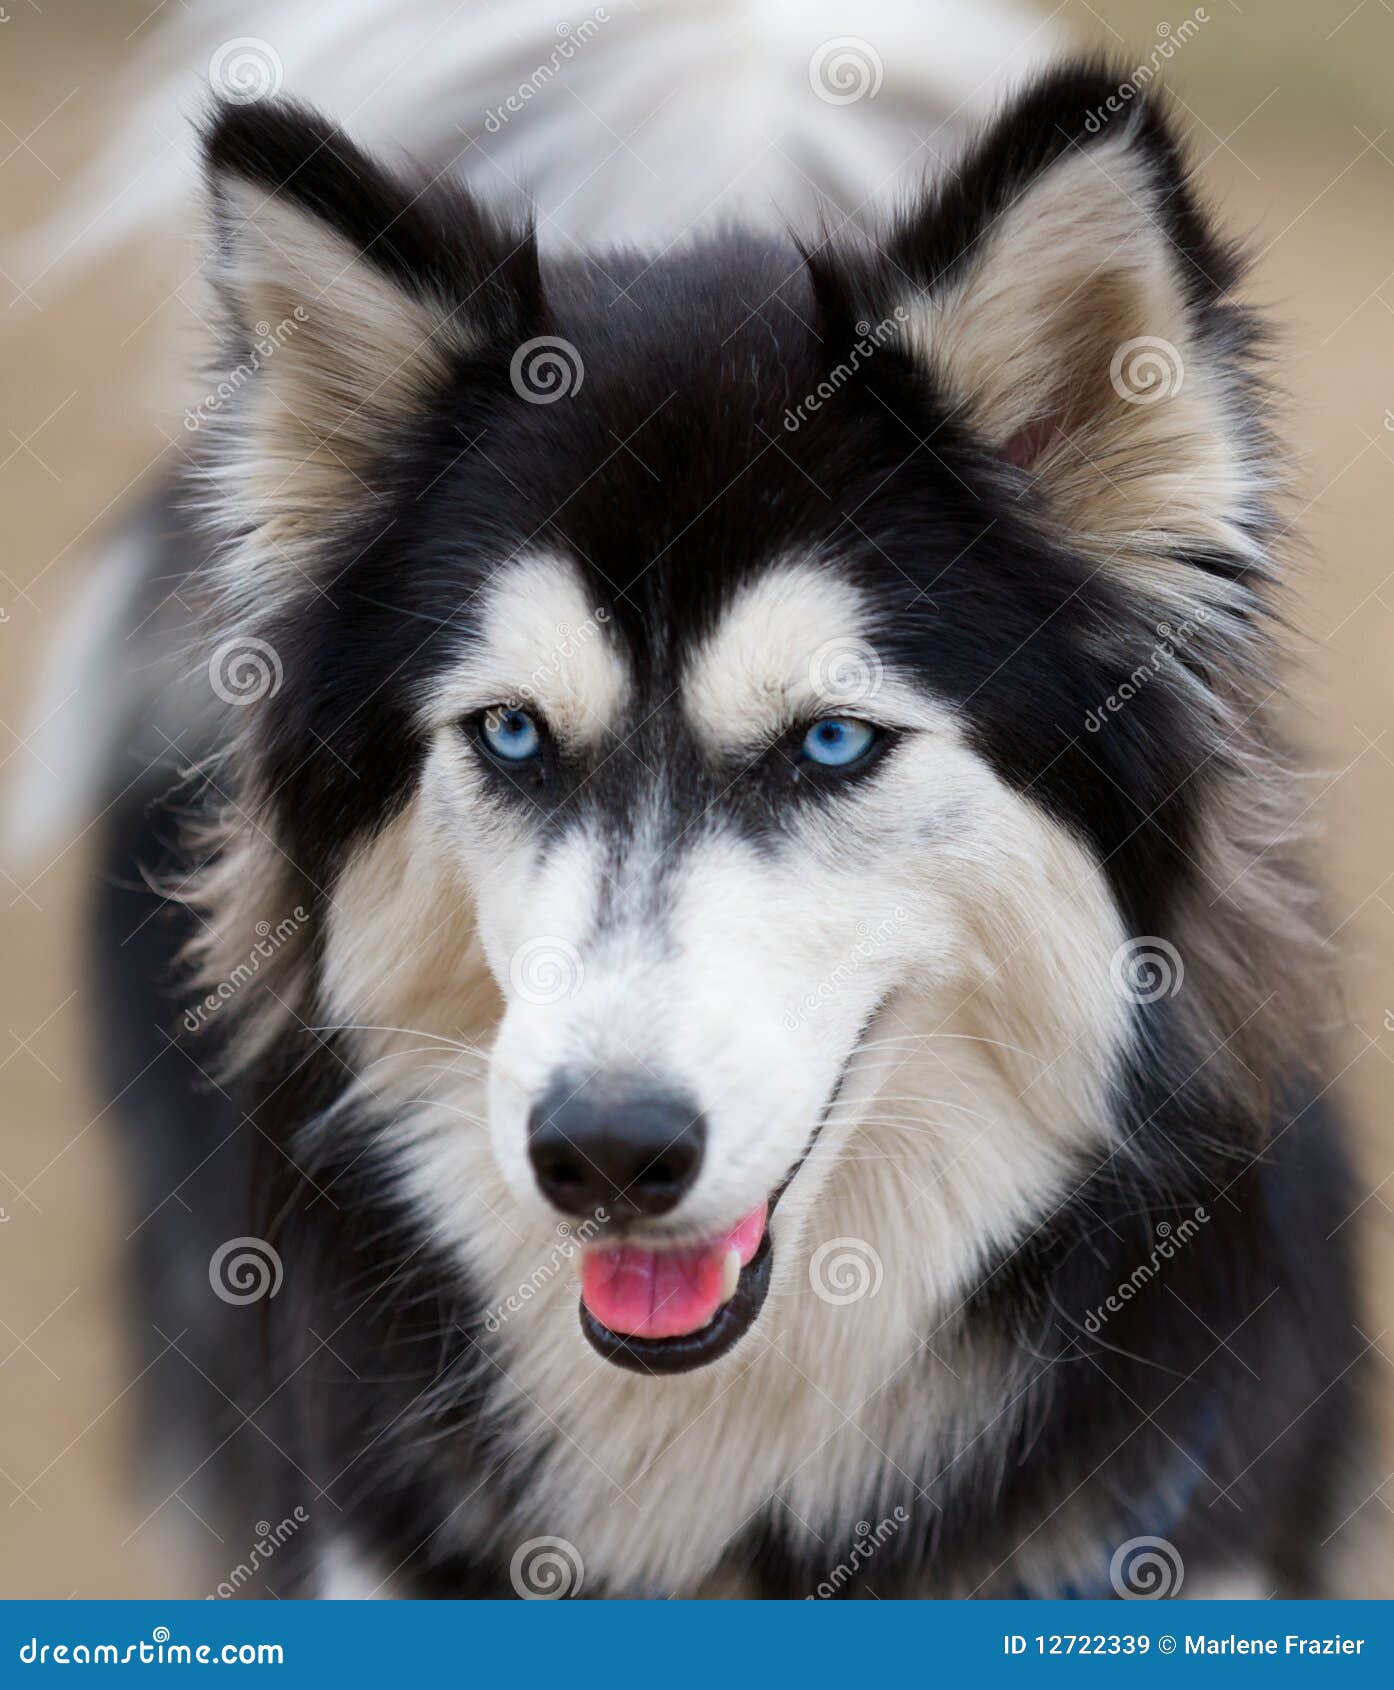 siberian husky dog breed.